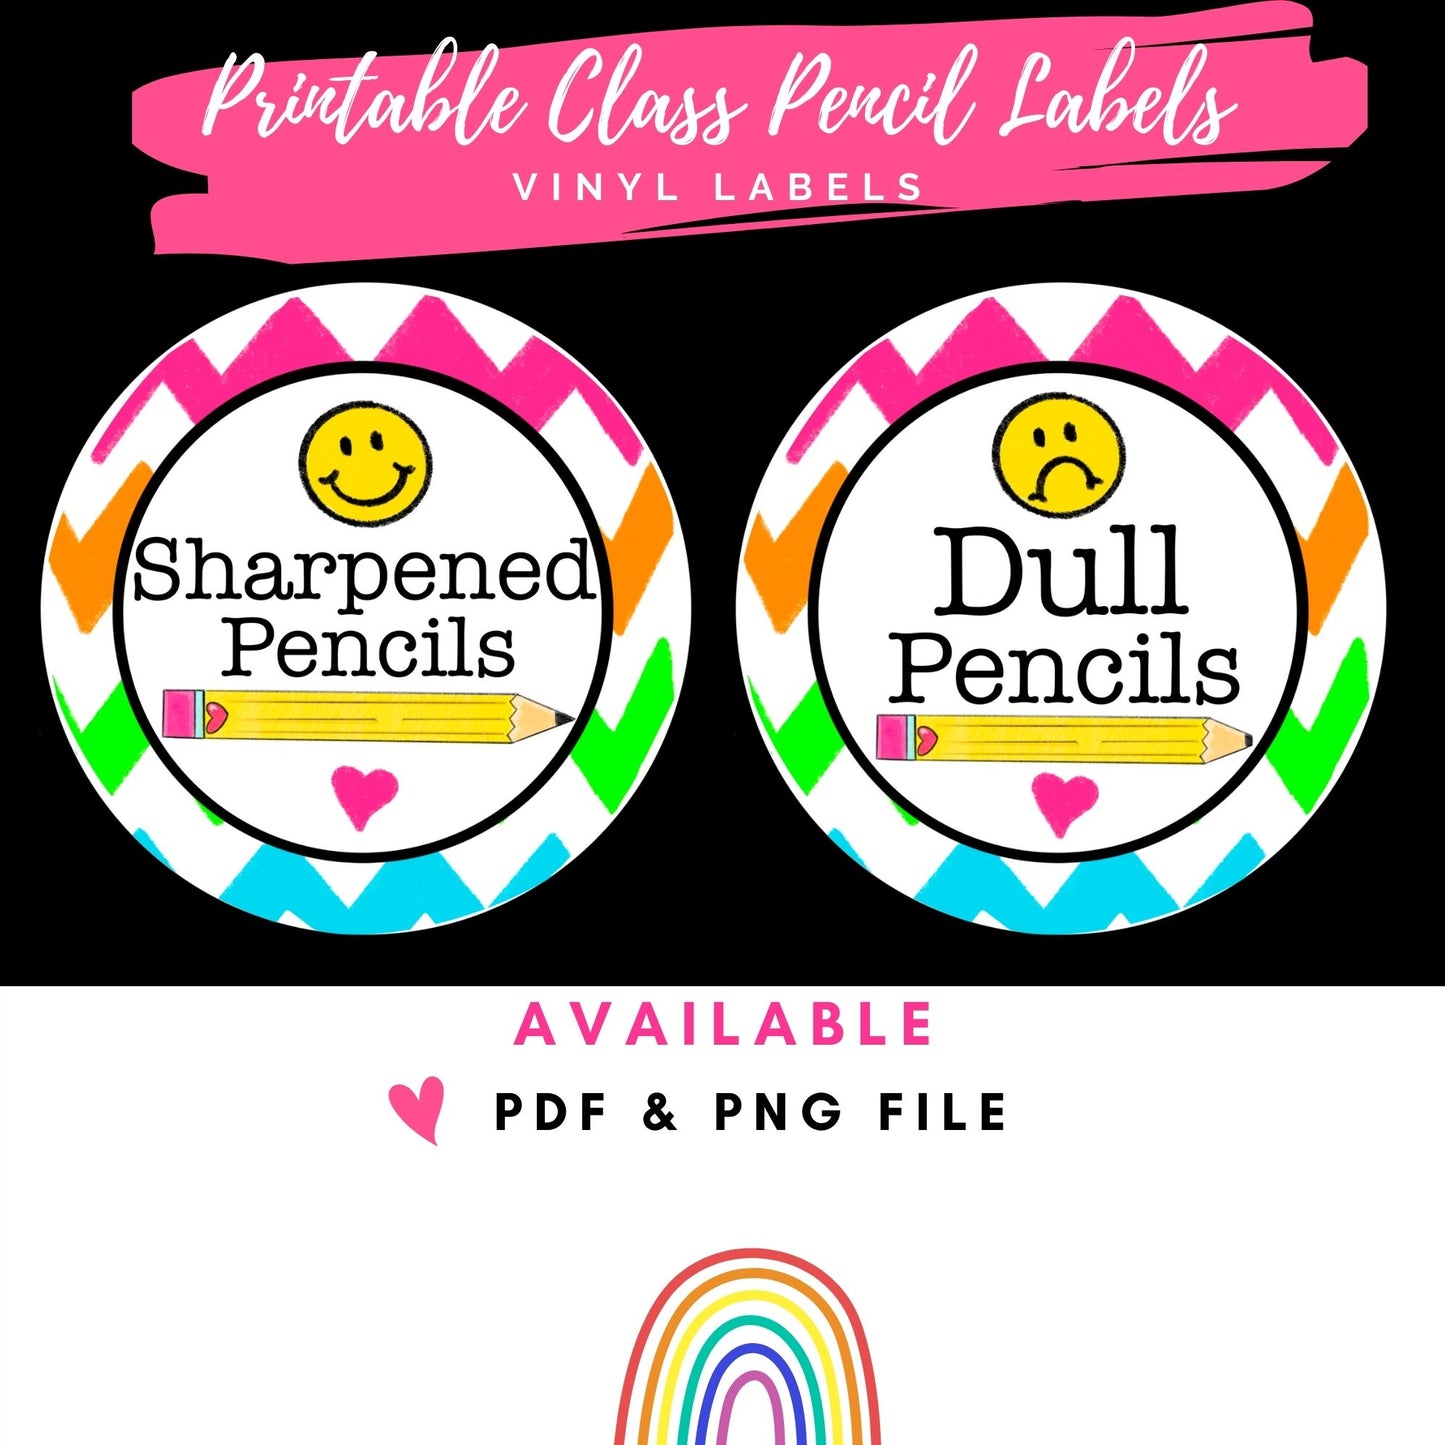 Printable Class Pencil Labels